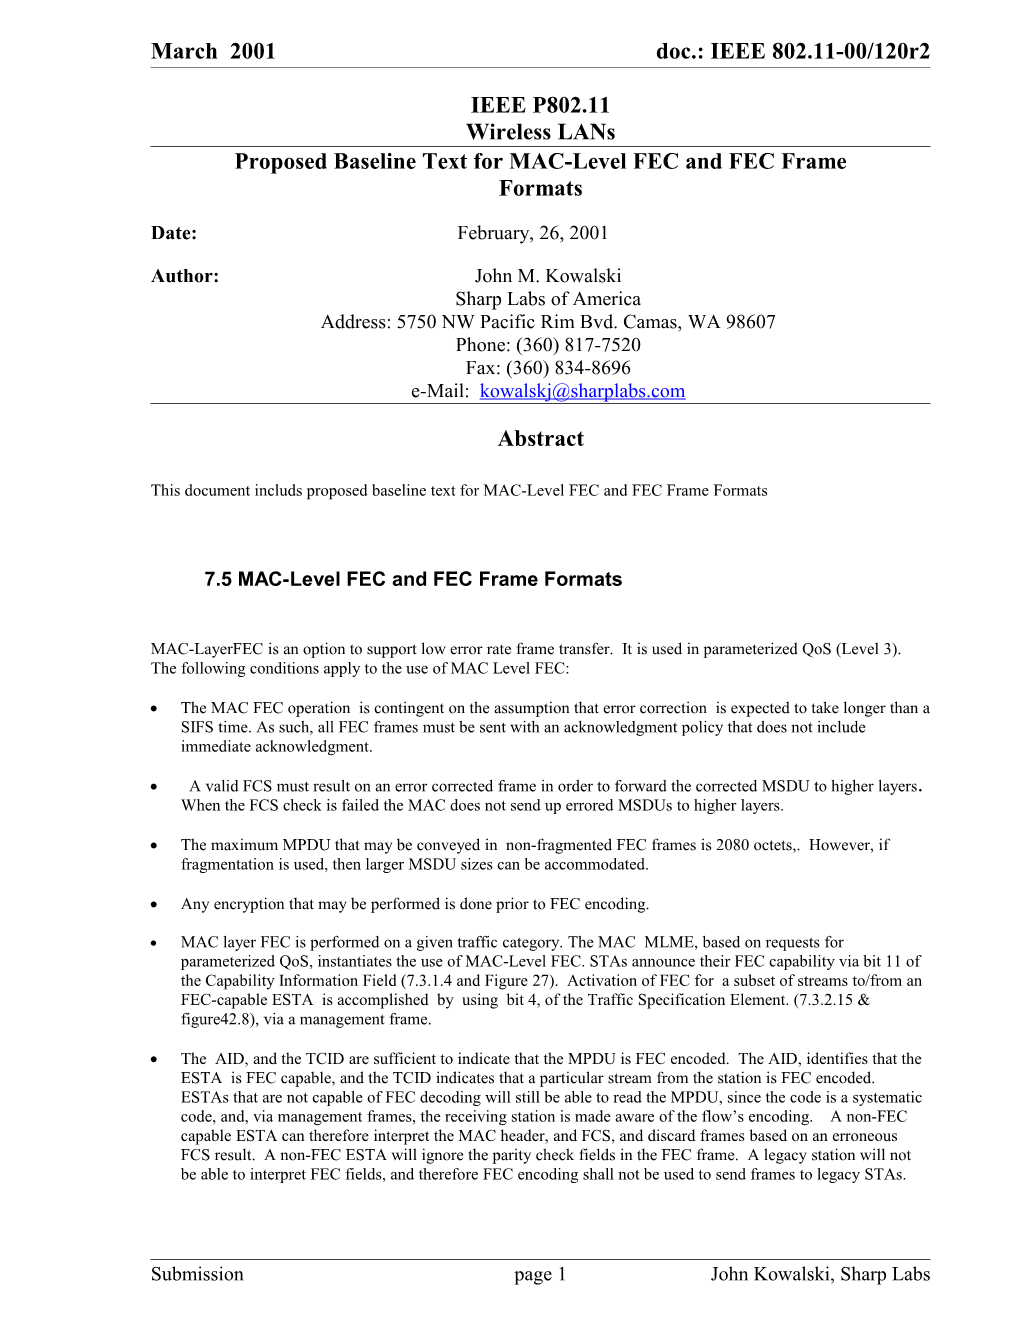 Proposed Baseline Text for MAC-Level FEC and FEC Frame Formats